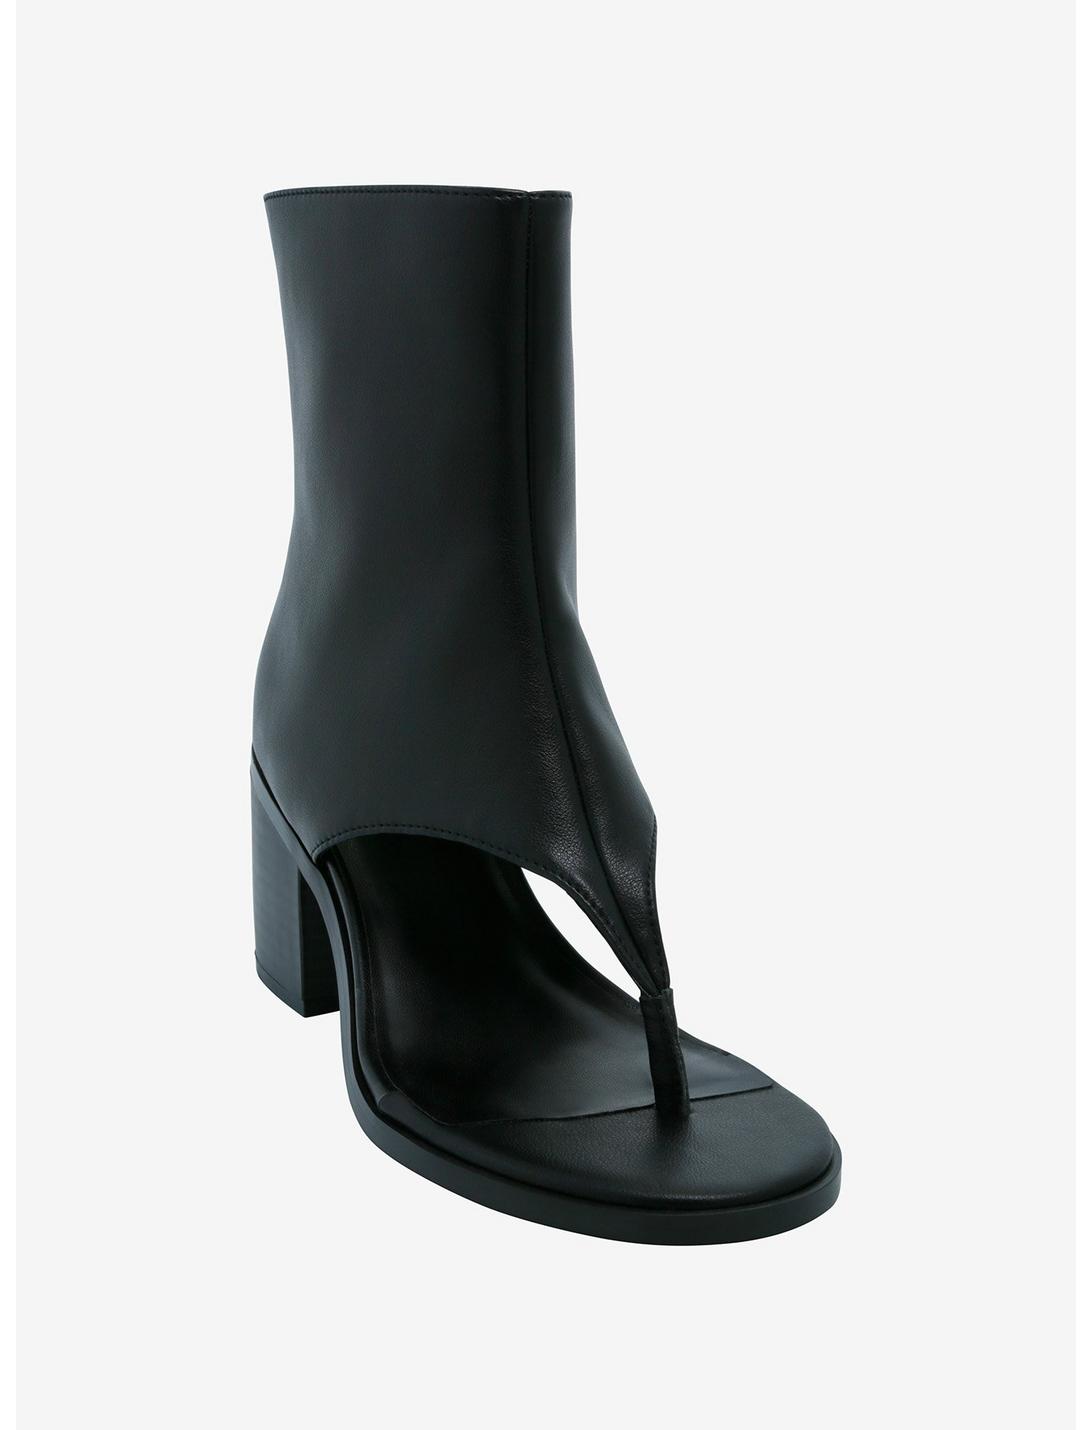 Azalea Wang Black Boot Sandals, MULTI, hi-res